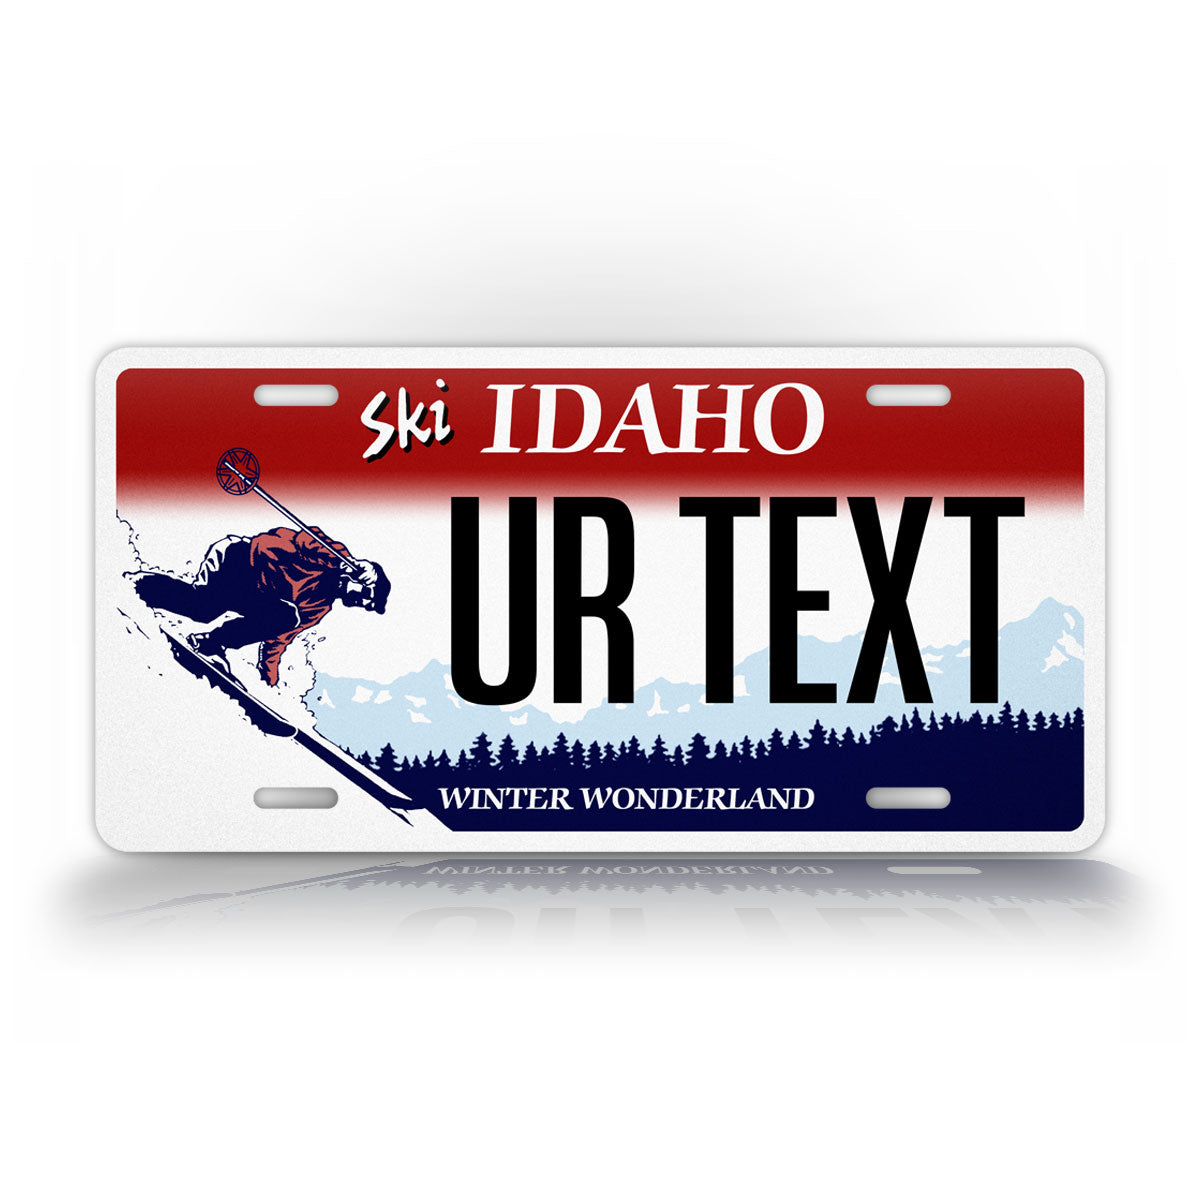 Custom Idaho Ski Winter Wonderland Personalized License Plate